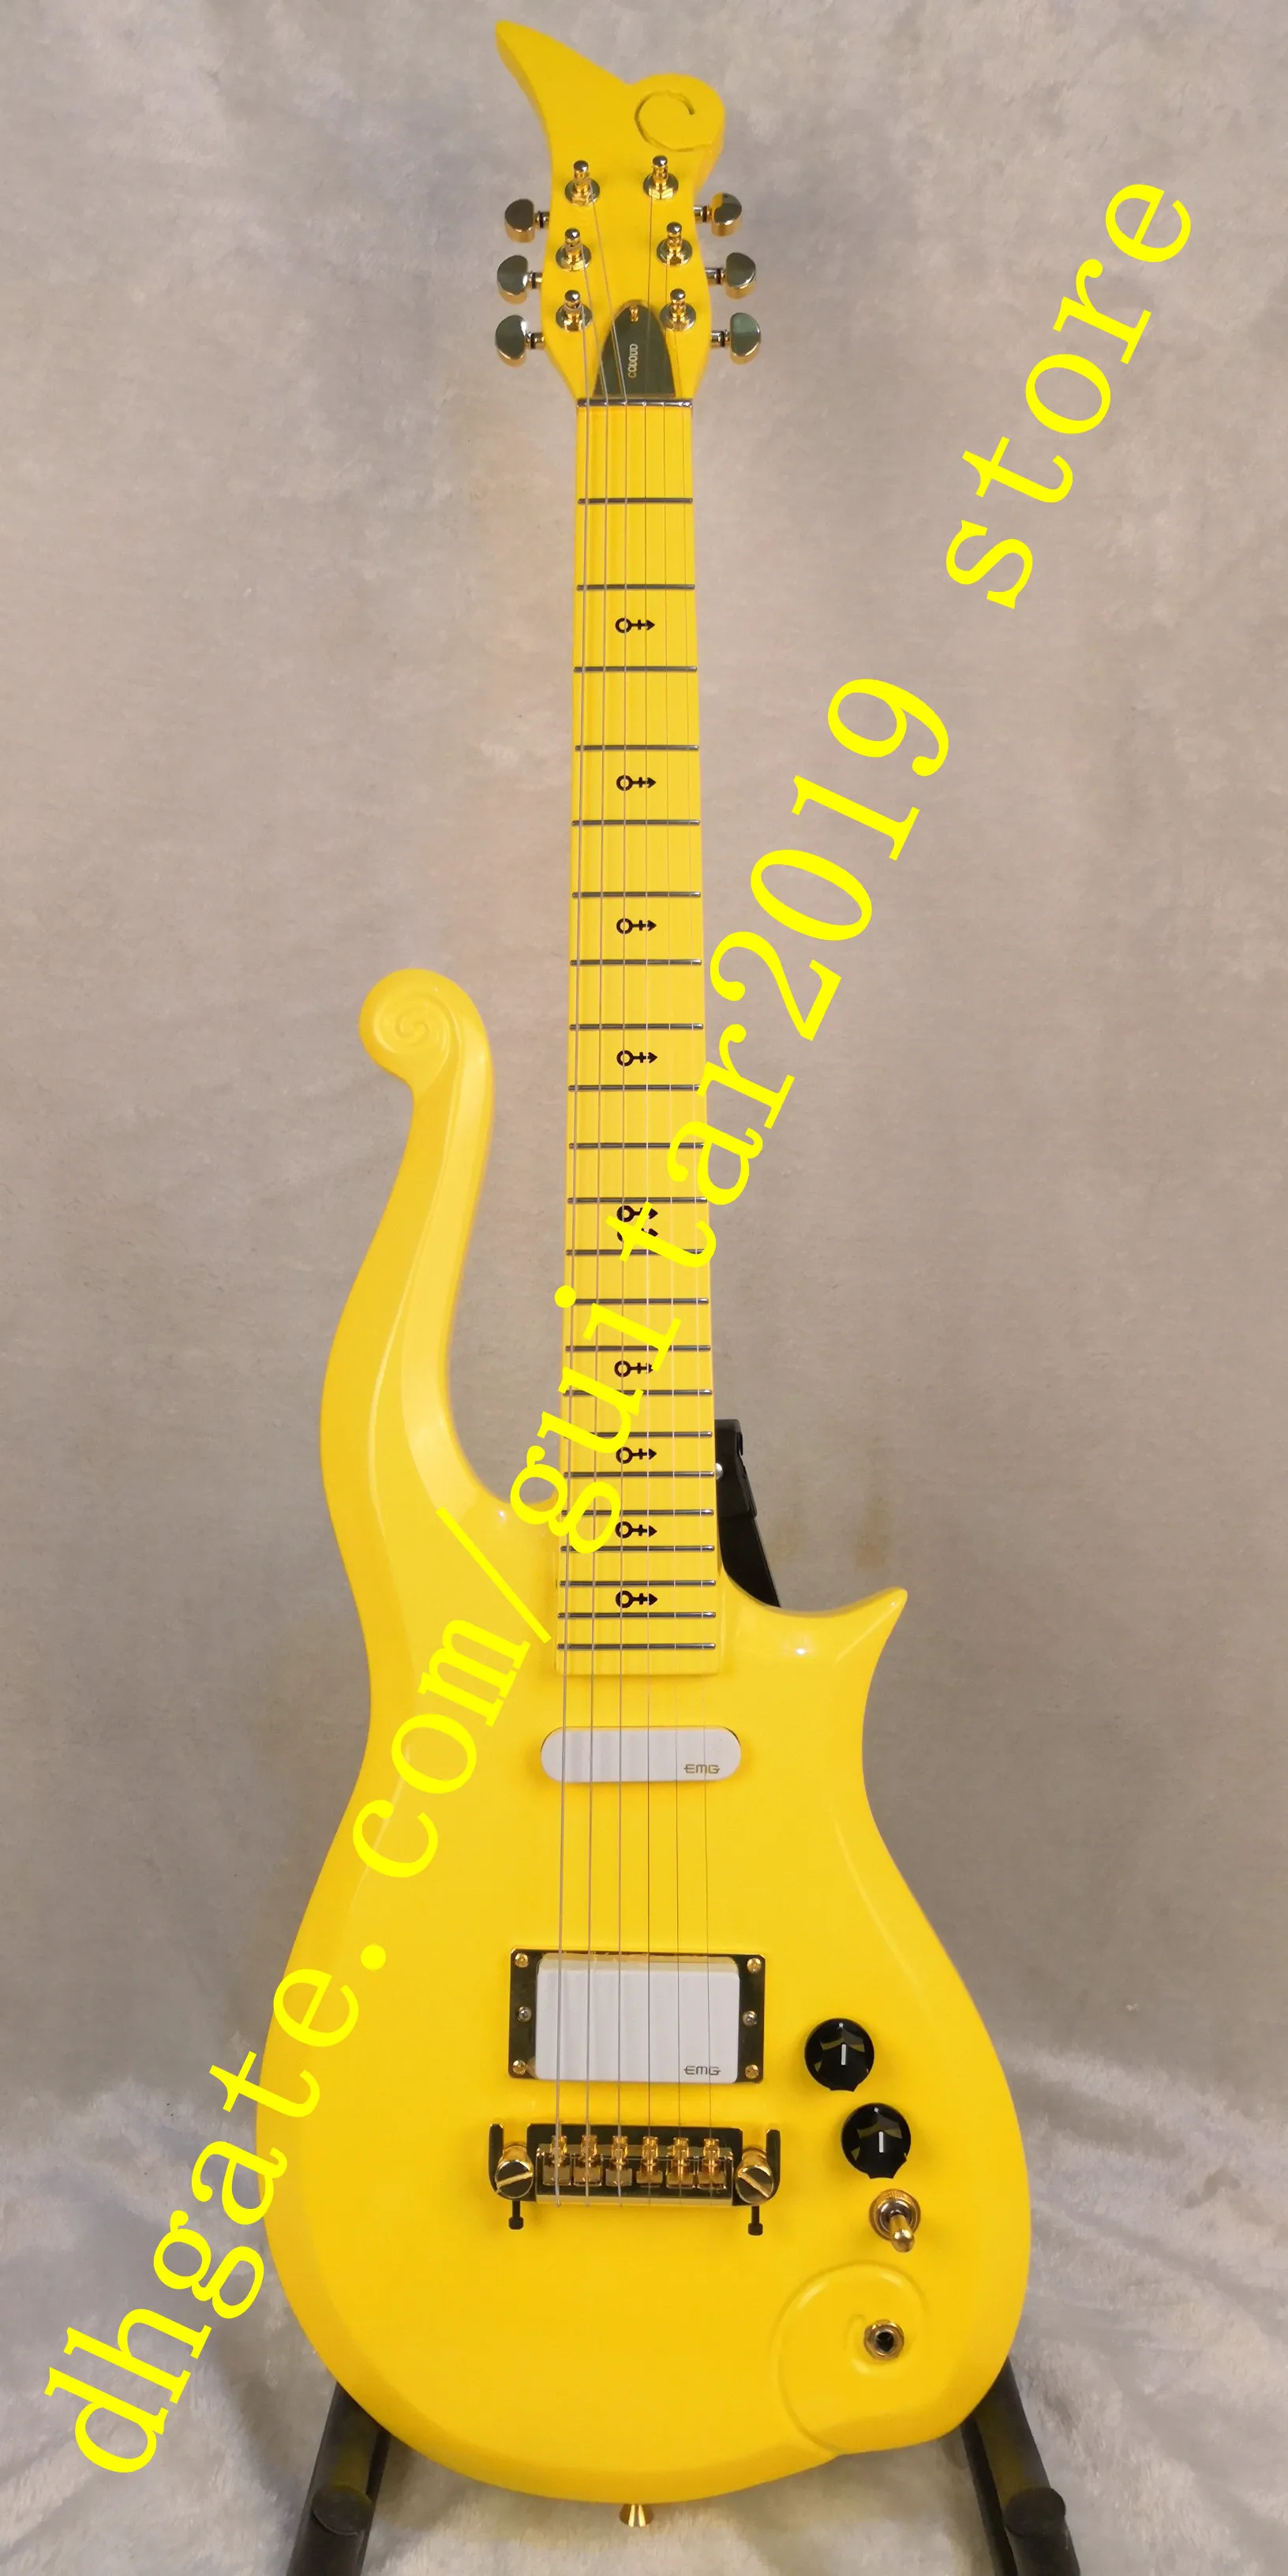 6 cordas pescoço através da parte inferior do corpo corpo de cinzas de guitarra elétrica e maple neck toda a cor amarela frete grátis